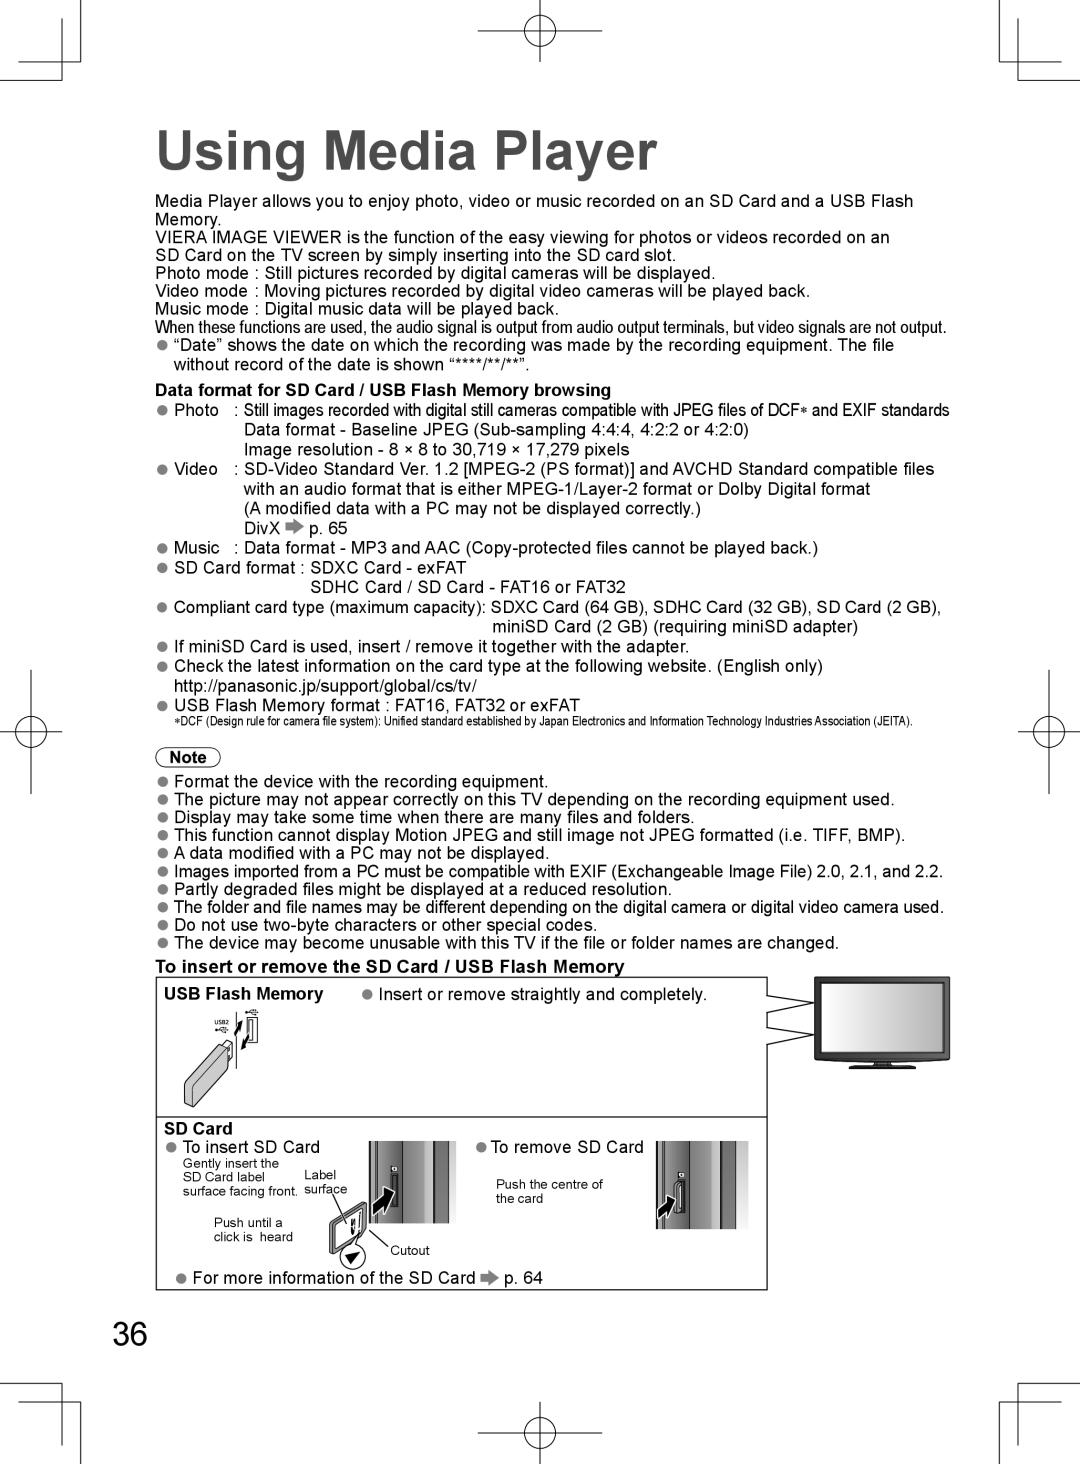 Panasonic TH-L32D25M manual Using Media Player, Data format for SD Card / USB Flash Memory browsing 